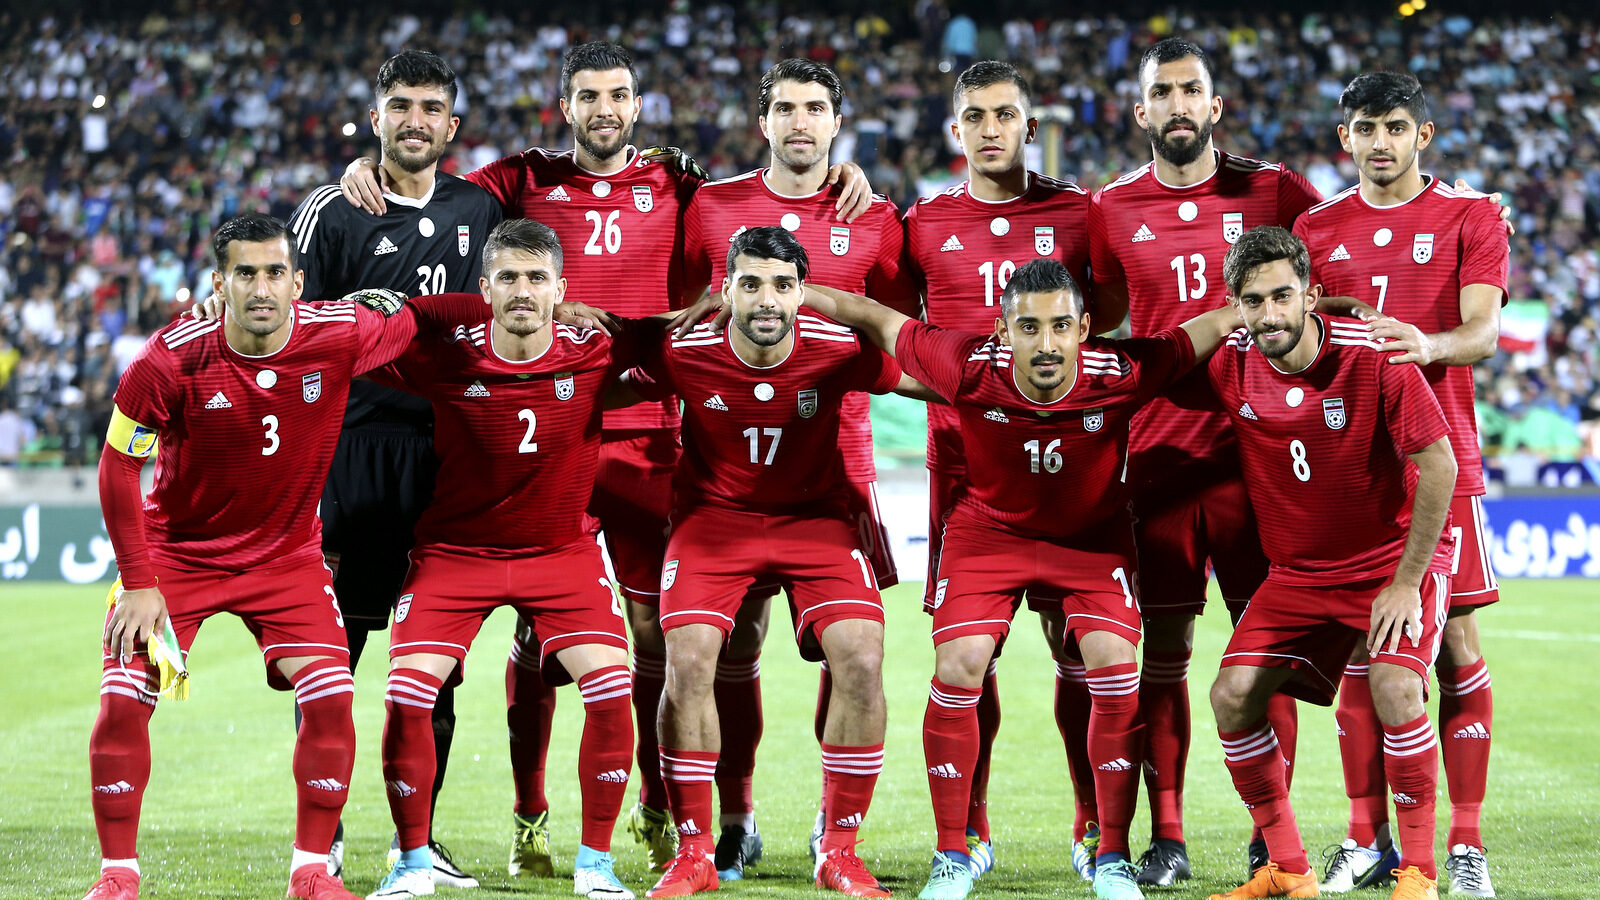 Iran's team poses for a team photo prior the international friendly soccer match between Iran and Uzbekistan at the Azadi Stadium in Tehran, Iran. May 19, 2018. Ebrahim Noroozi | AP